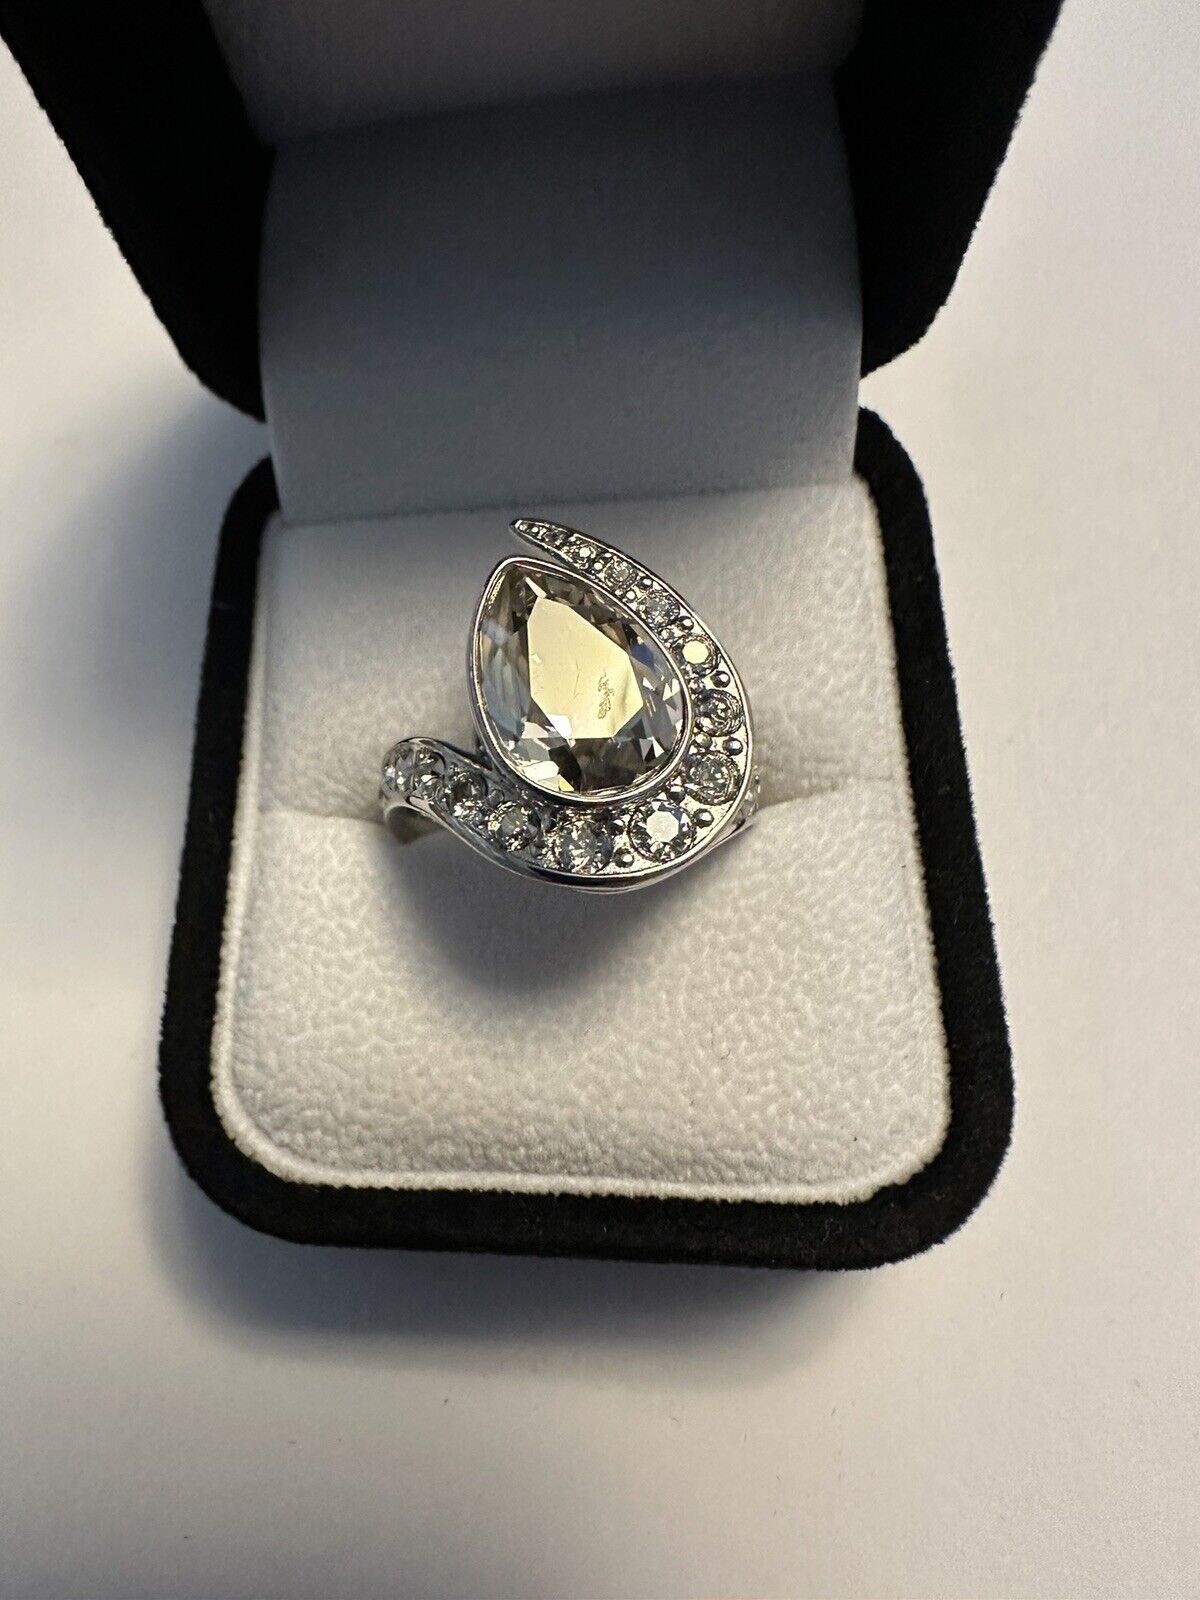 Stunning Atelier Swarovski White Crystal Ring Size 58